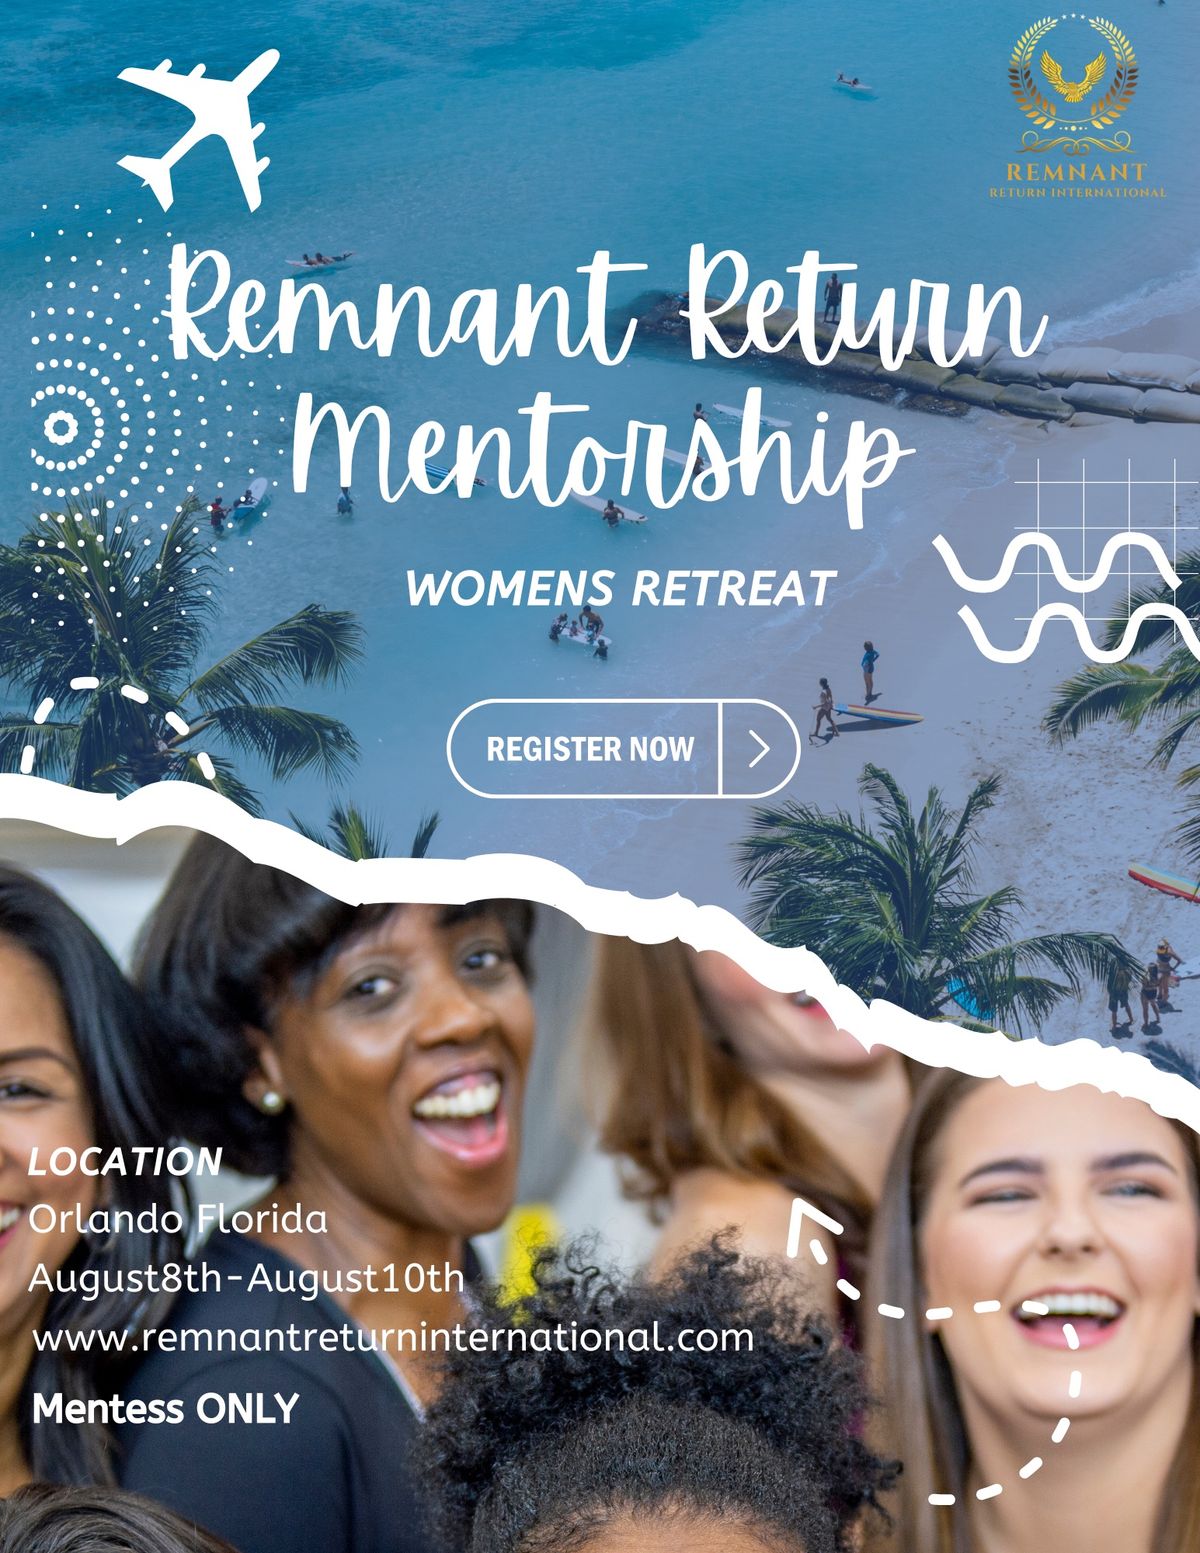 Remnant Return Mentorship meeting